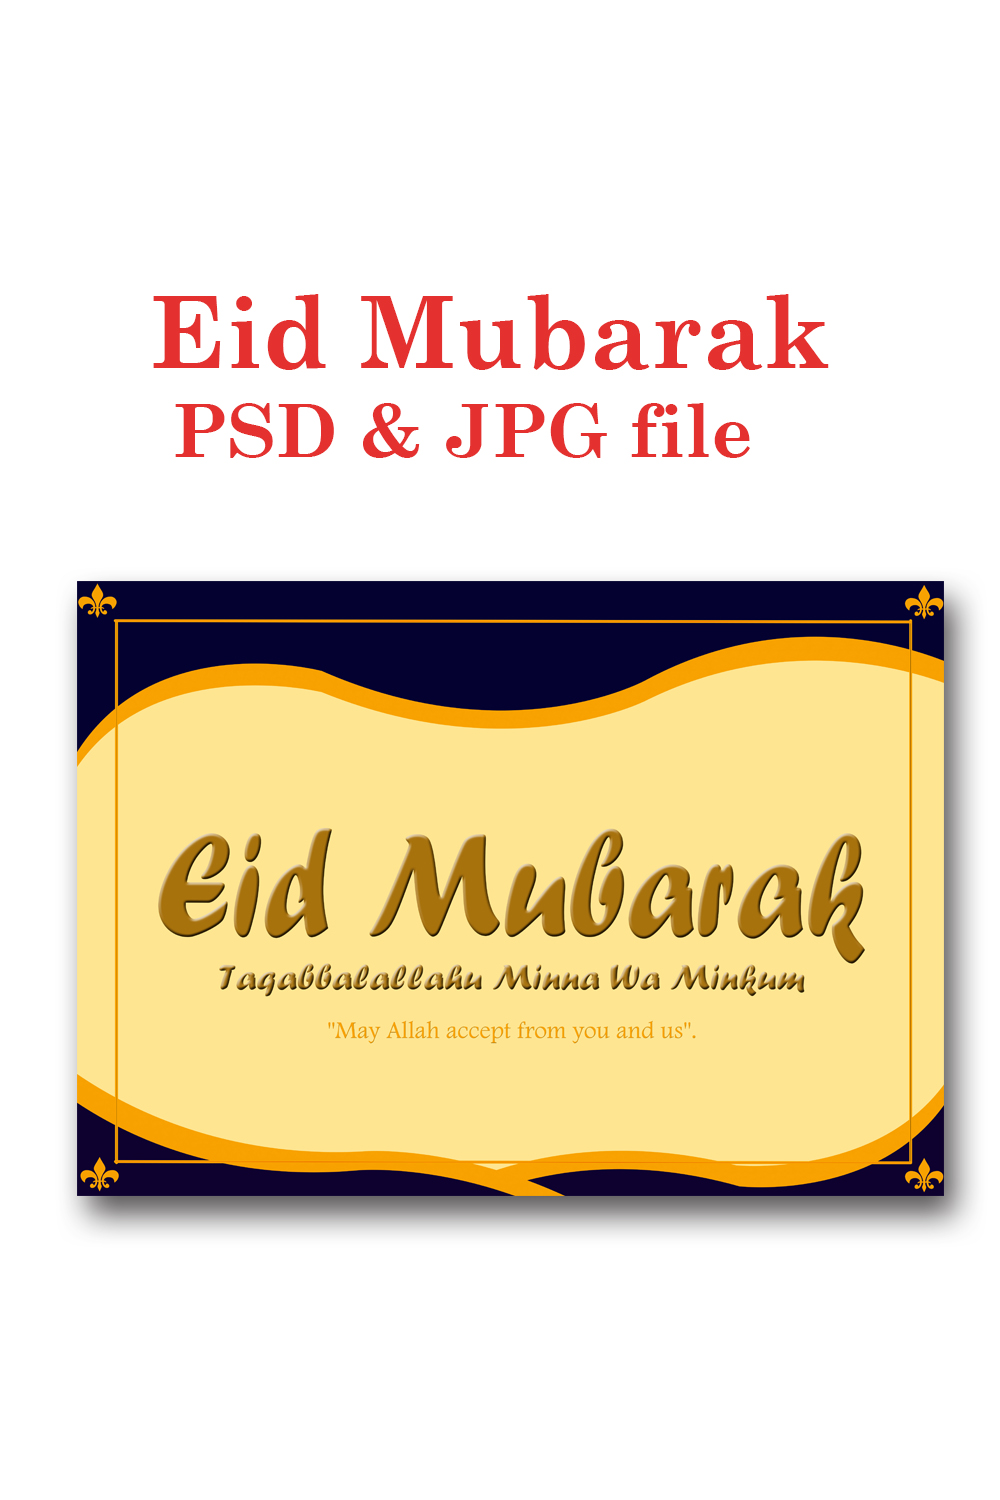 Wishing Eid Mubarak pinterest preview image.